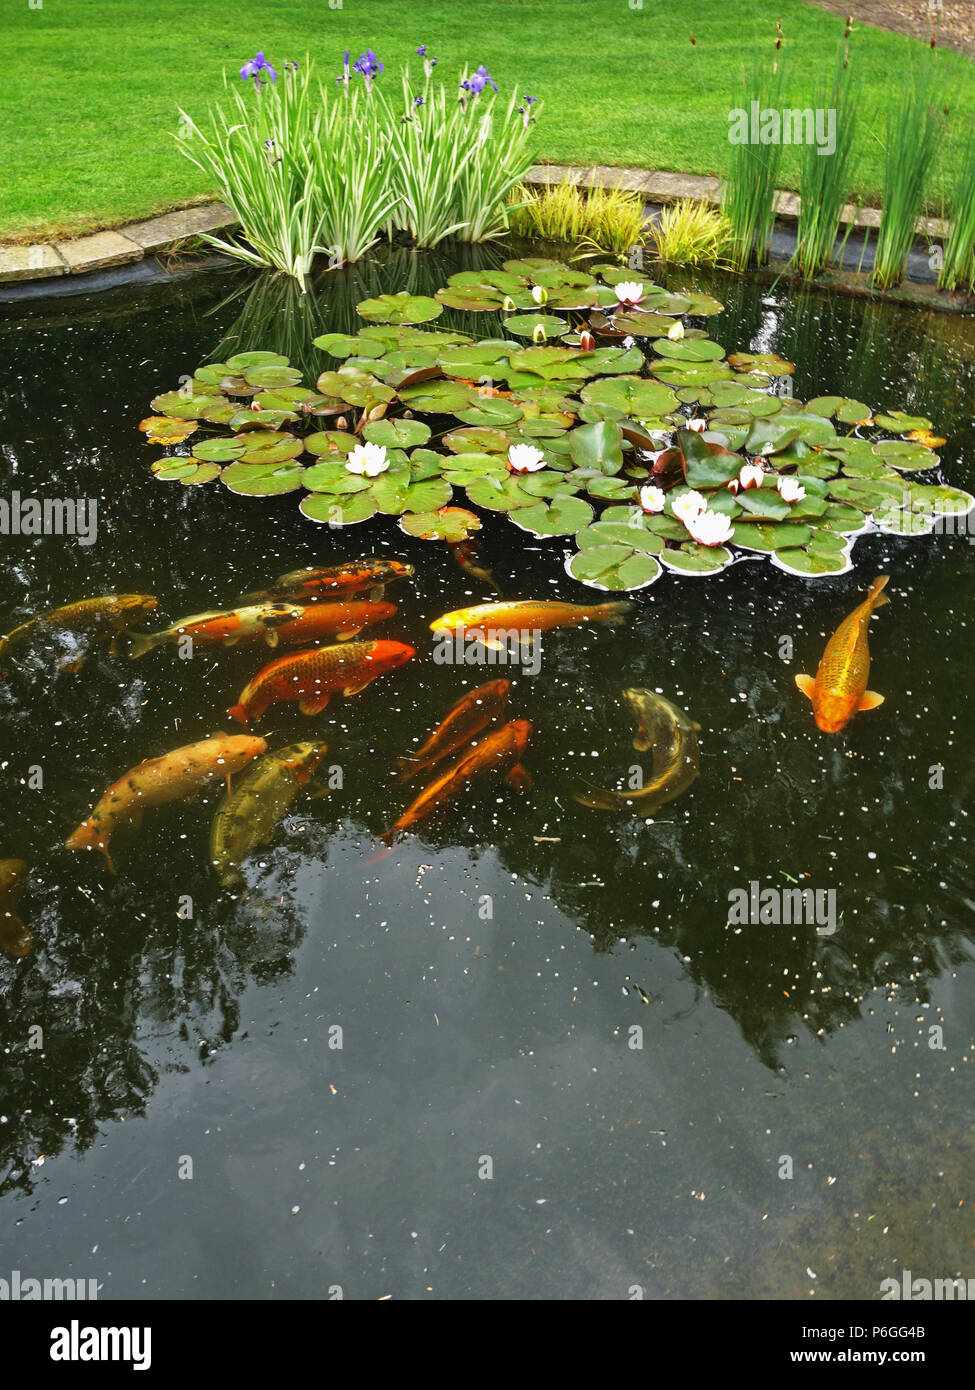 Fishpond with various medium sized garden pond fish Stock Photo - Alamy